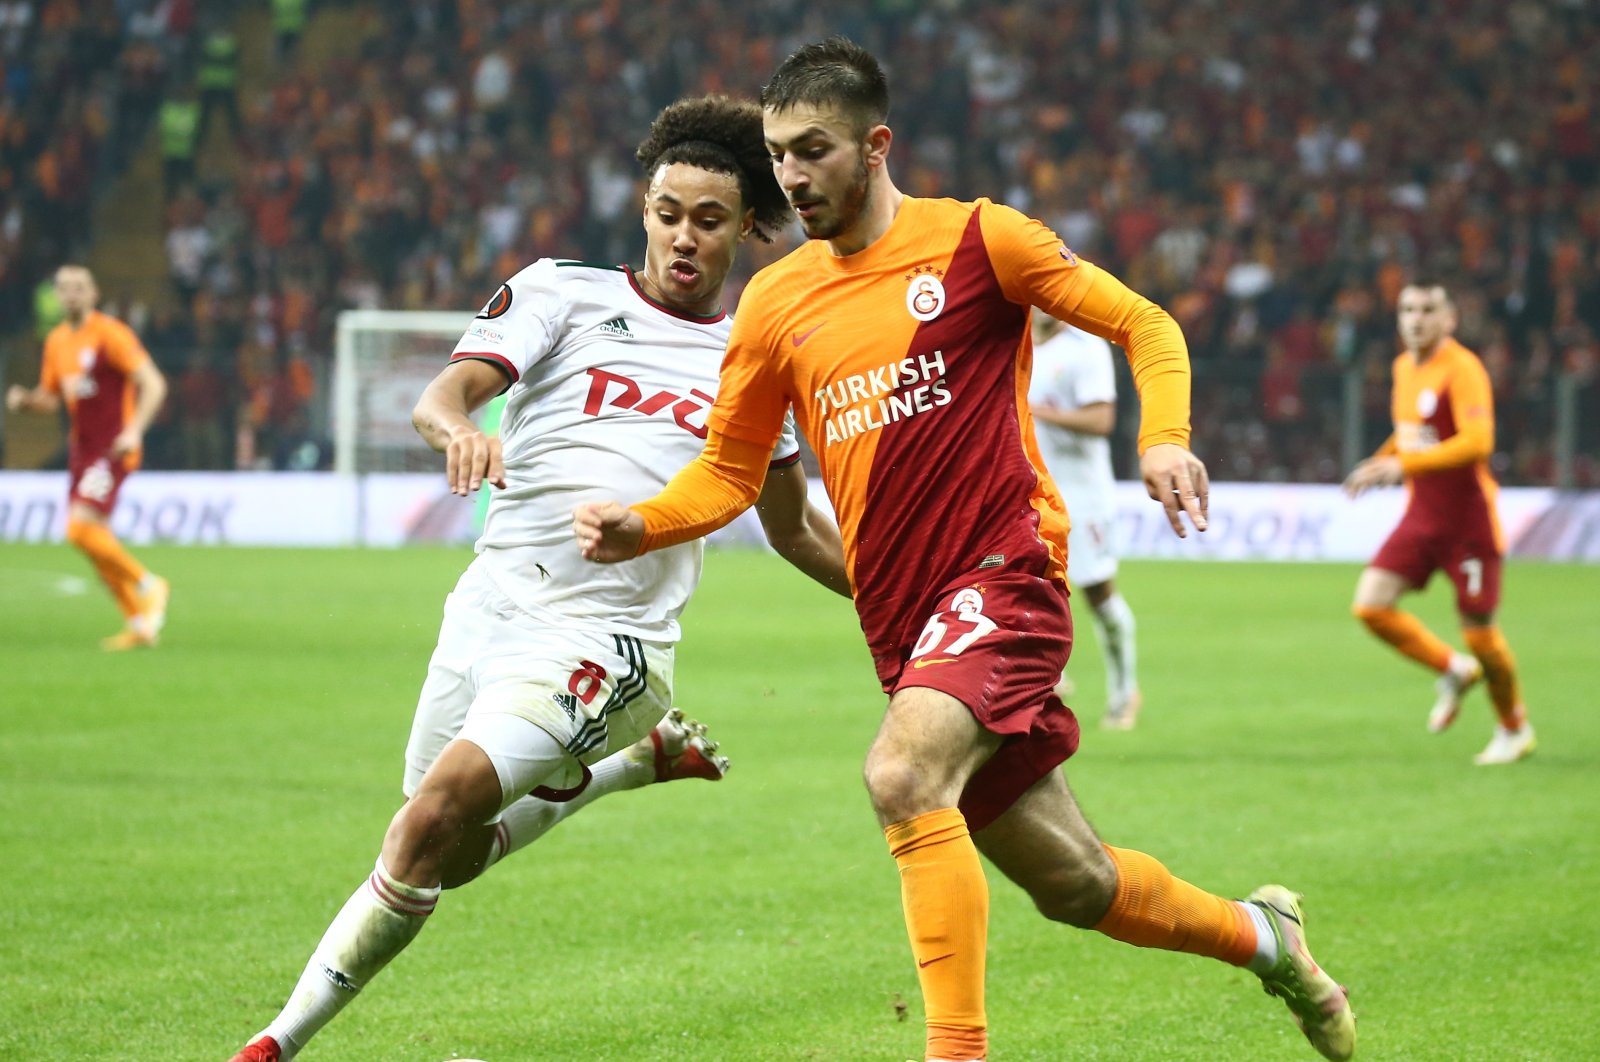 Galatasaray's Halil Dervişoğlu (R) in action during the UEFA Europa League match against Lokomotiv Moscow in Istanbul, Turkey, Nov. 4, 2021 (IHA Photo)